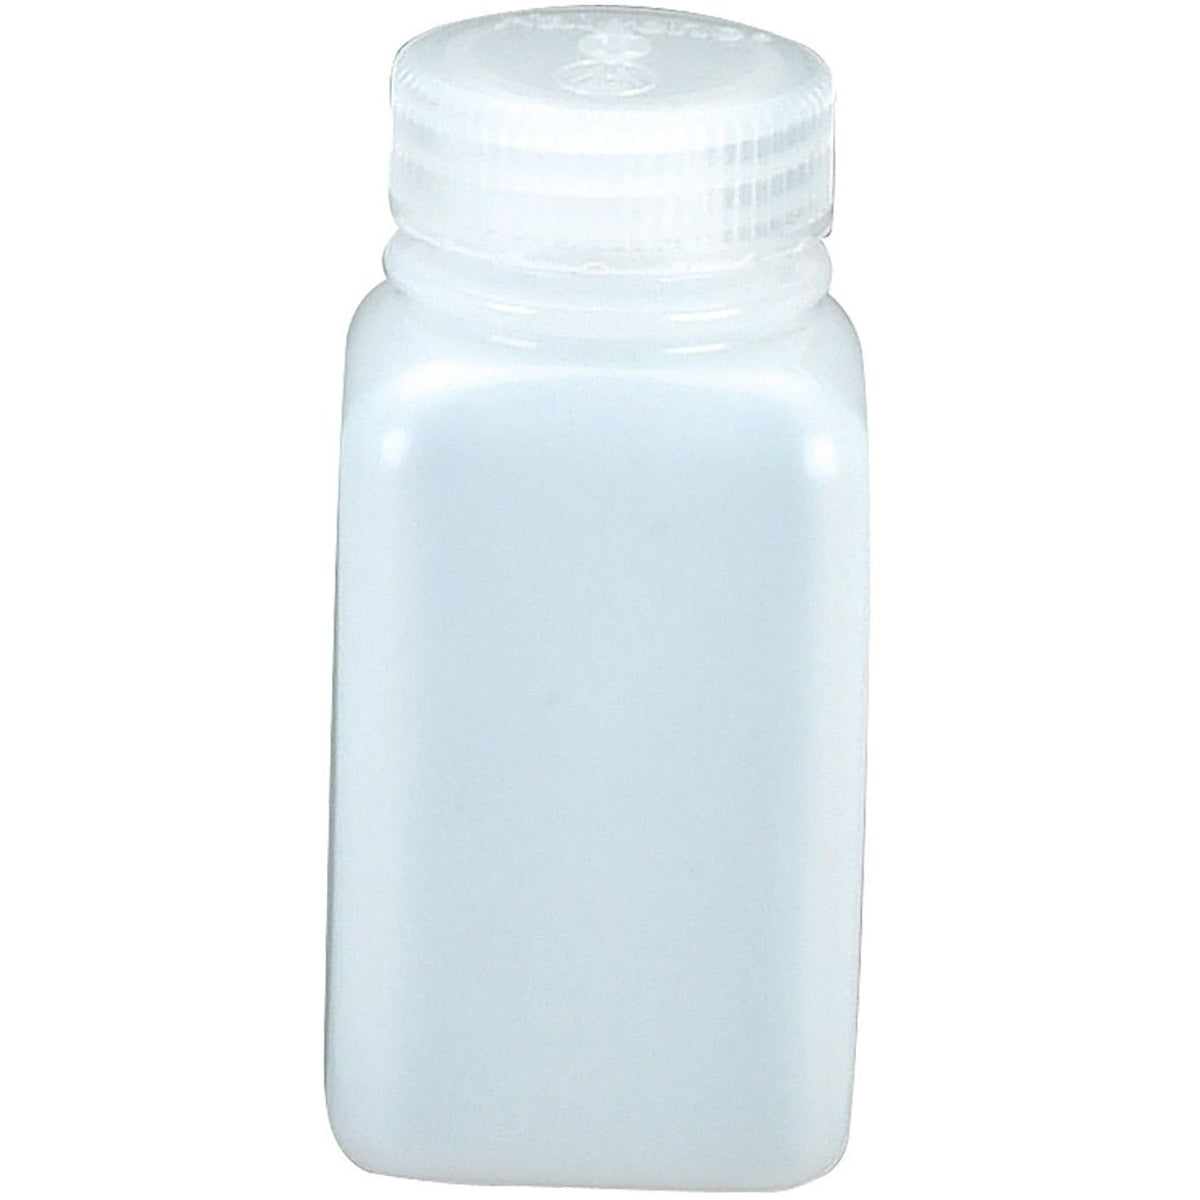 Nalgene HDPE Wide Mouth Square Bottle - White Nalgene